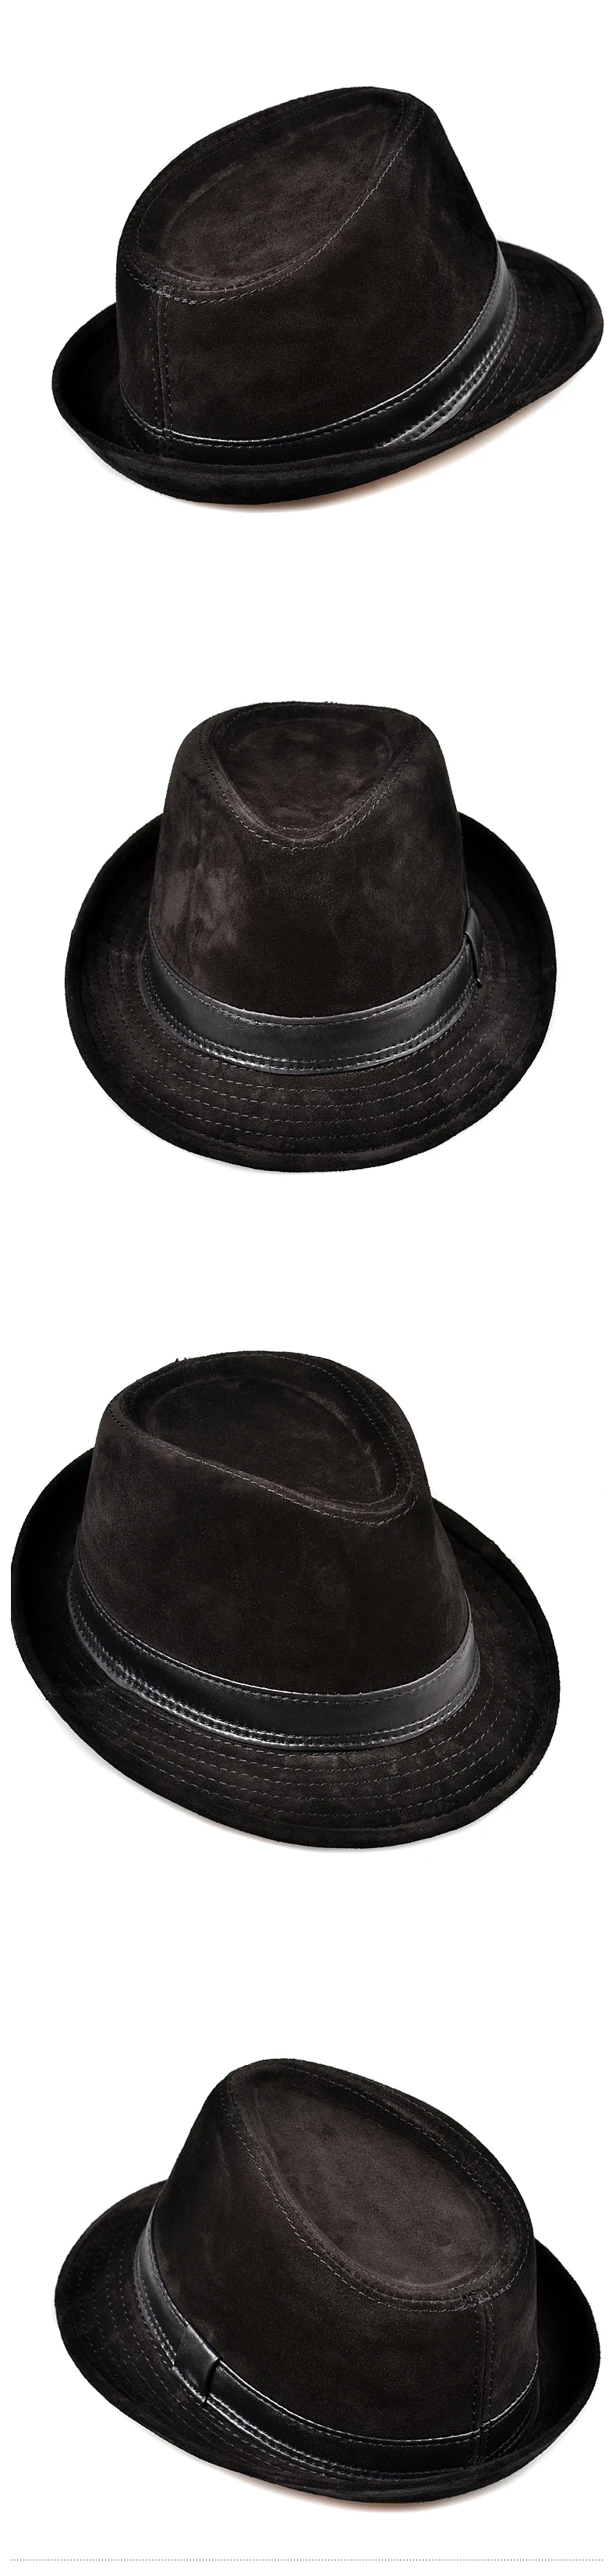 Men Genuine Leather Suede Cow Skin Nubuck Brown Fedoras Hats Women Gentleman Male Jazz Hip Pop Caps 56-60cm Fitted Hat